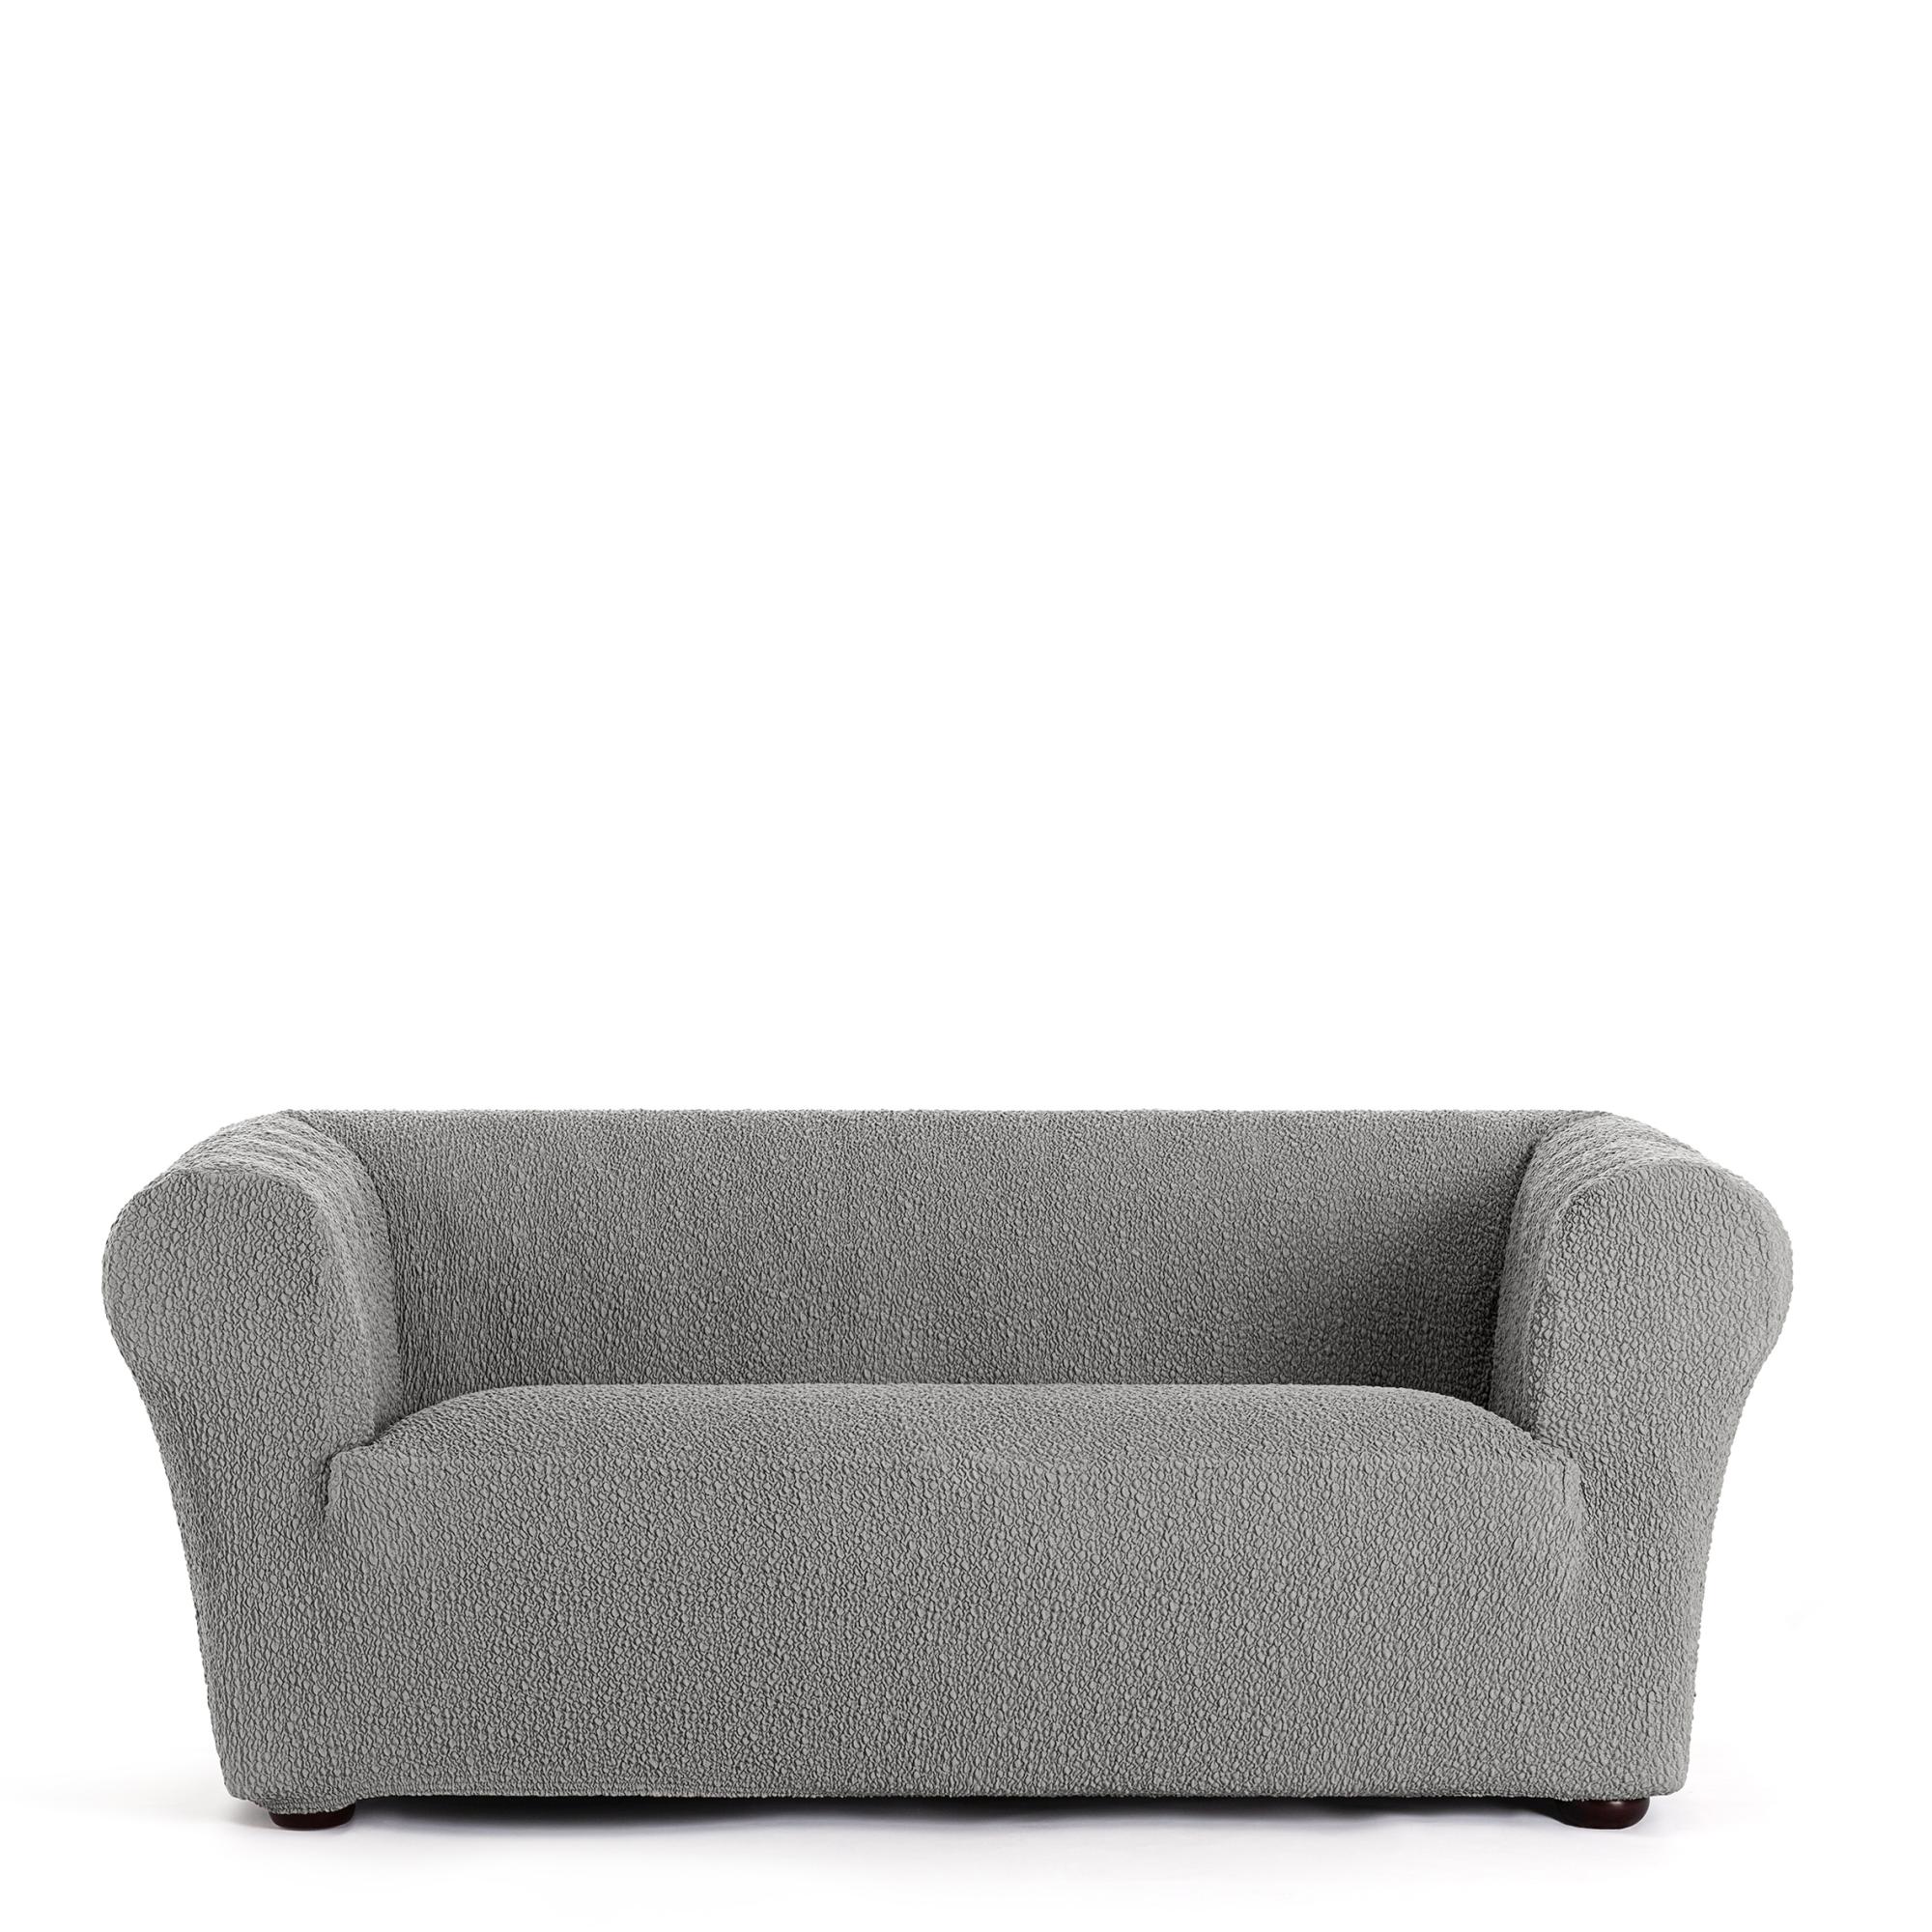 Funda de sofá antimanchas con chaise longue color liso naranja claro